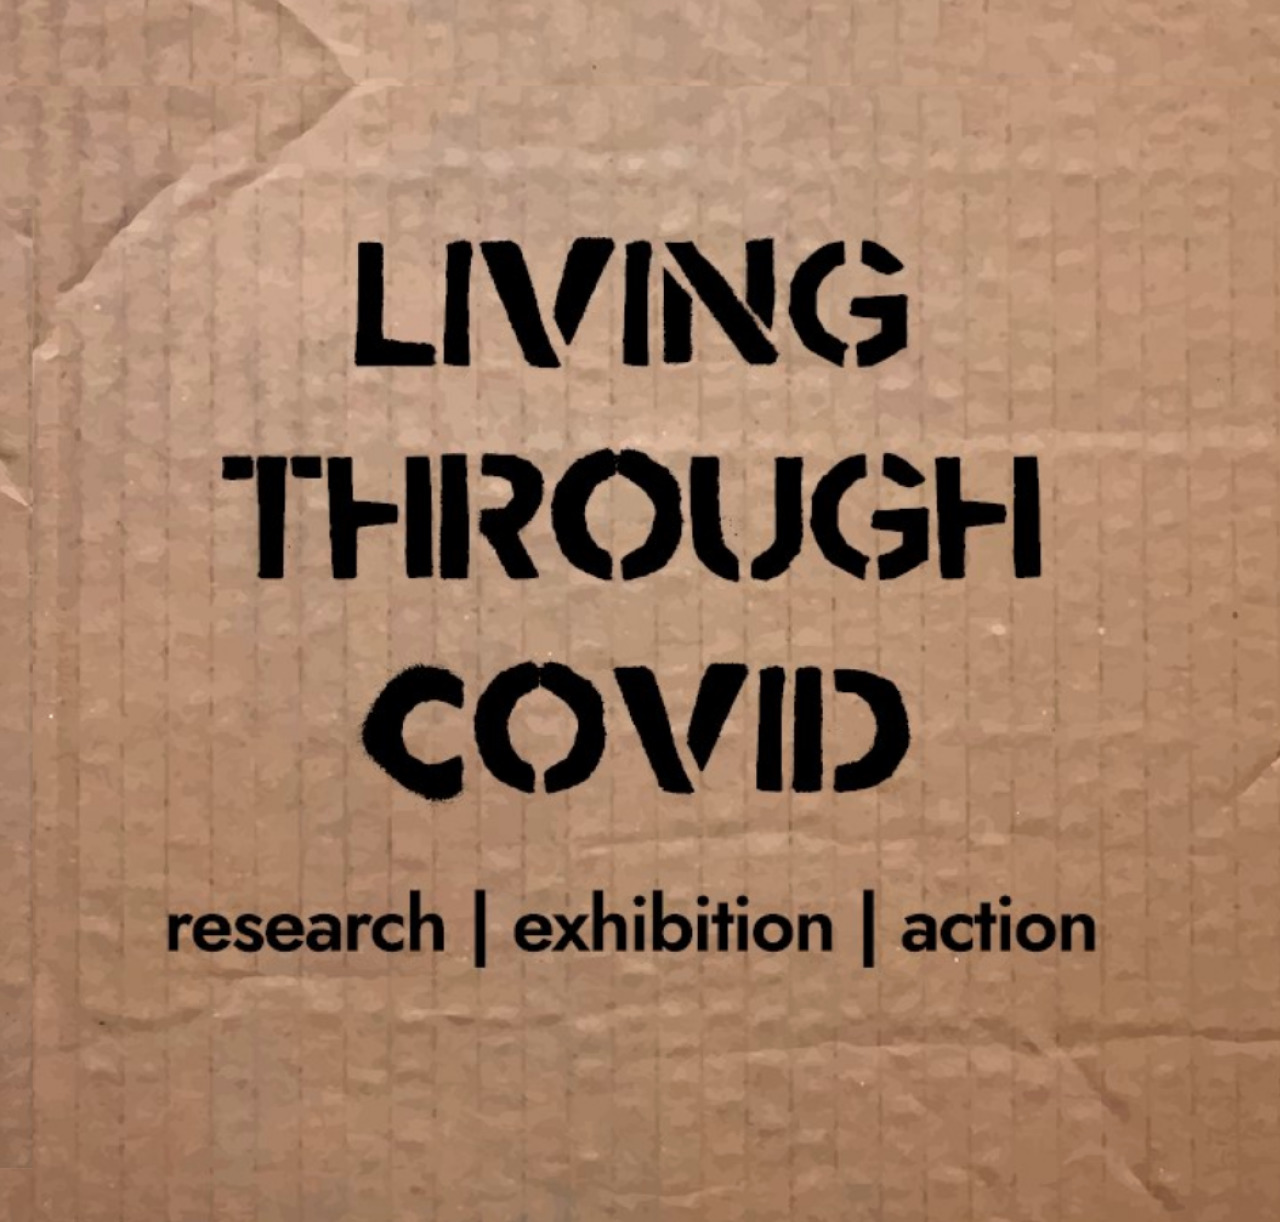 Living through Covid image